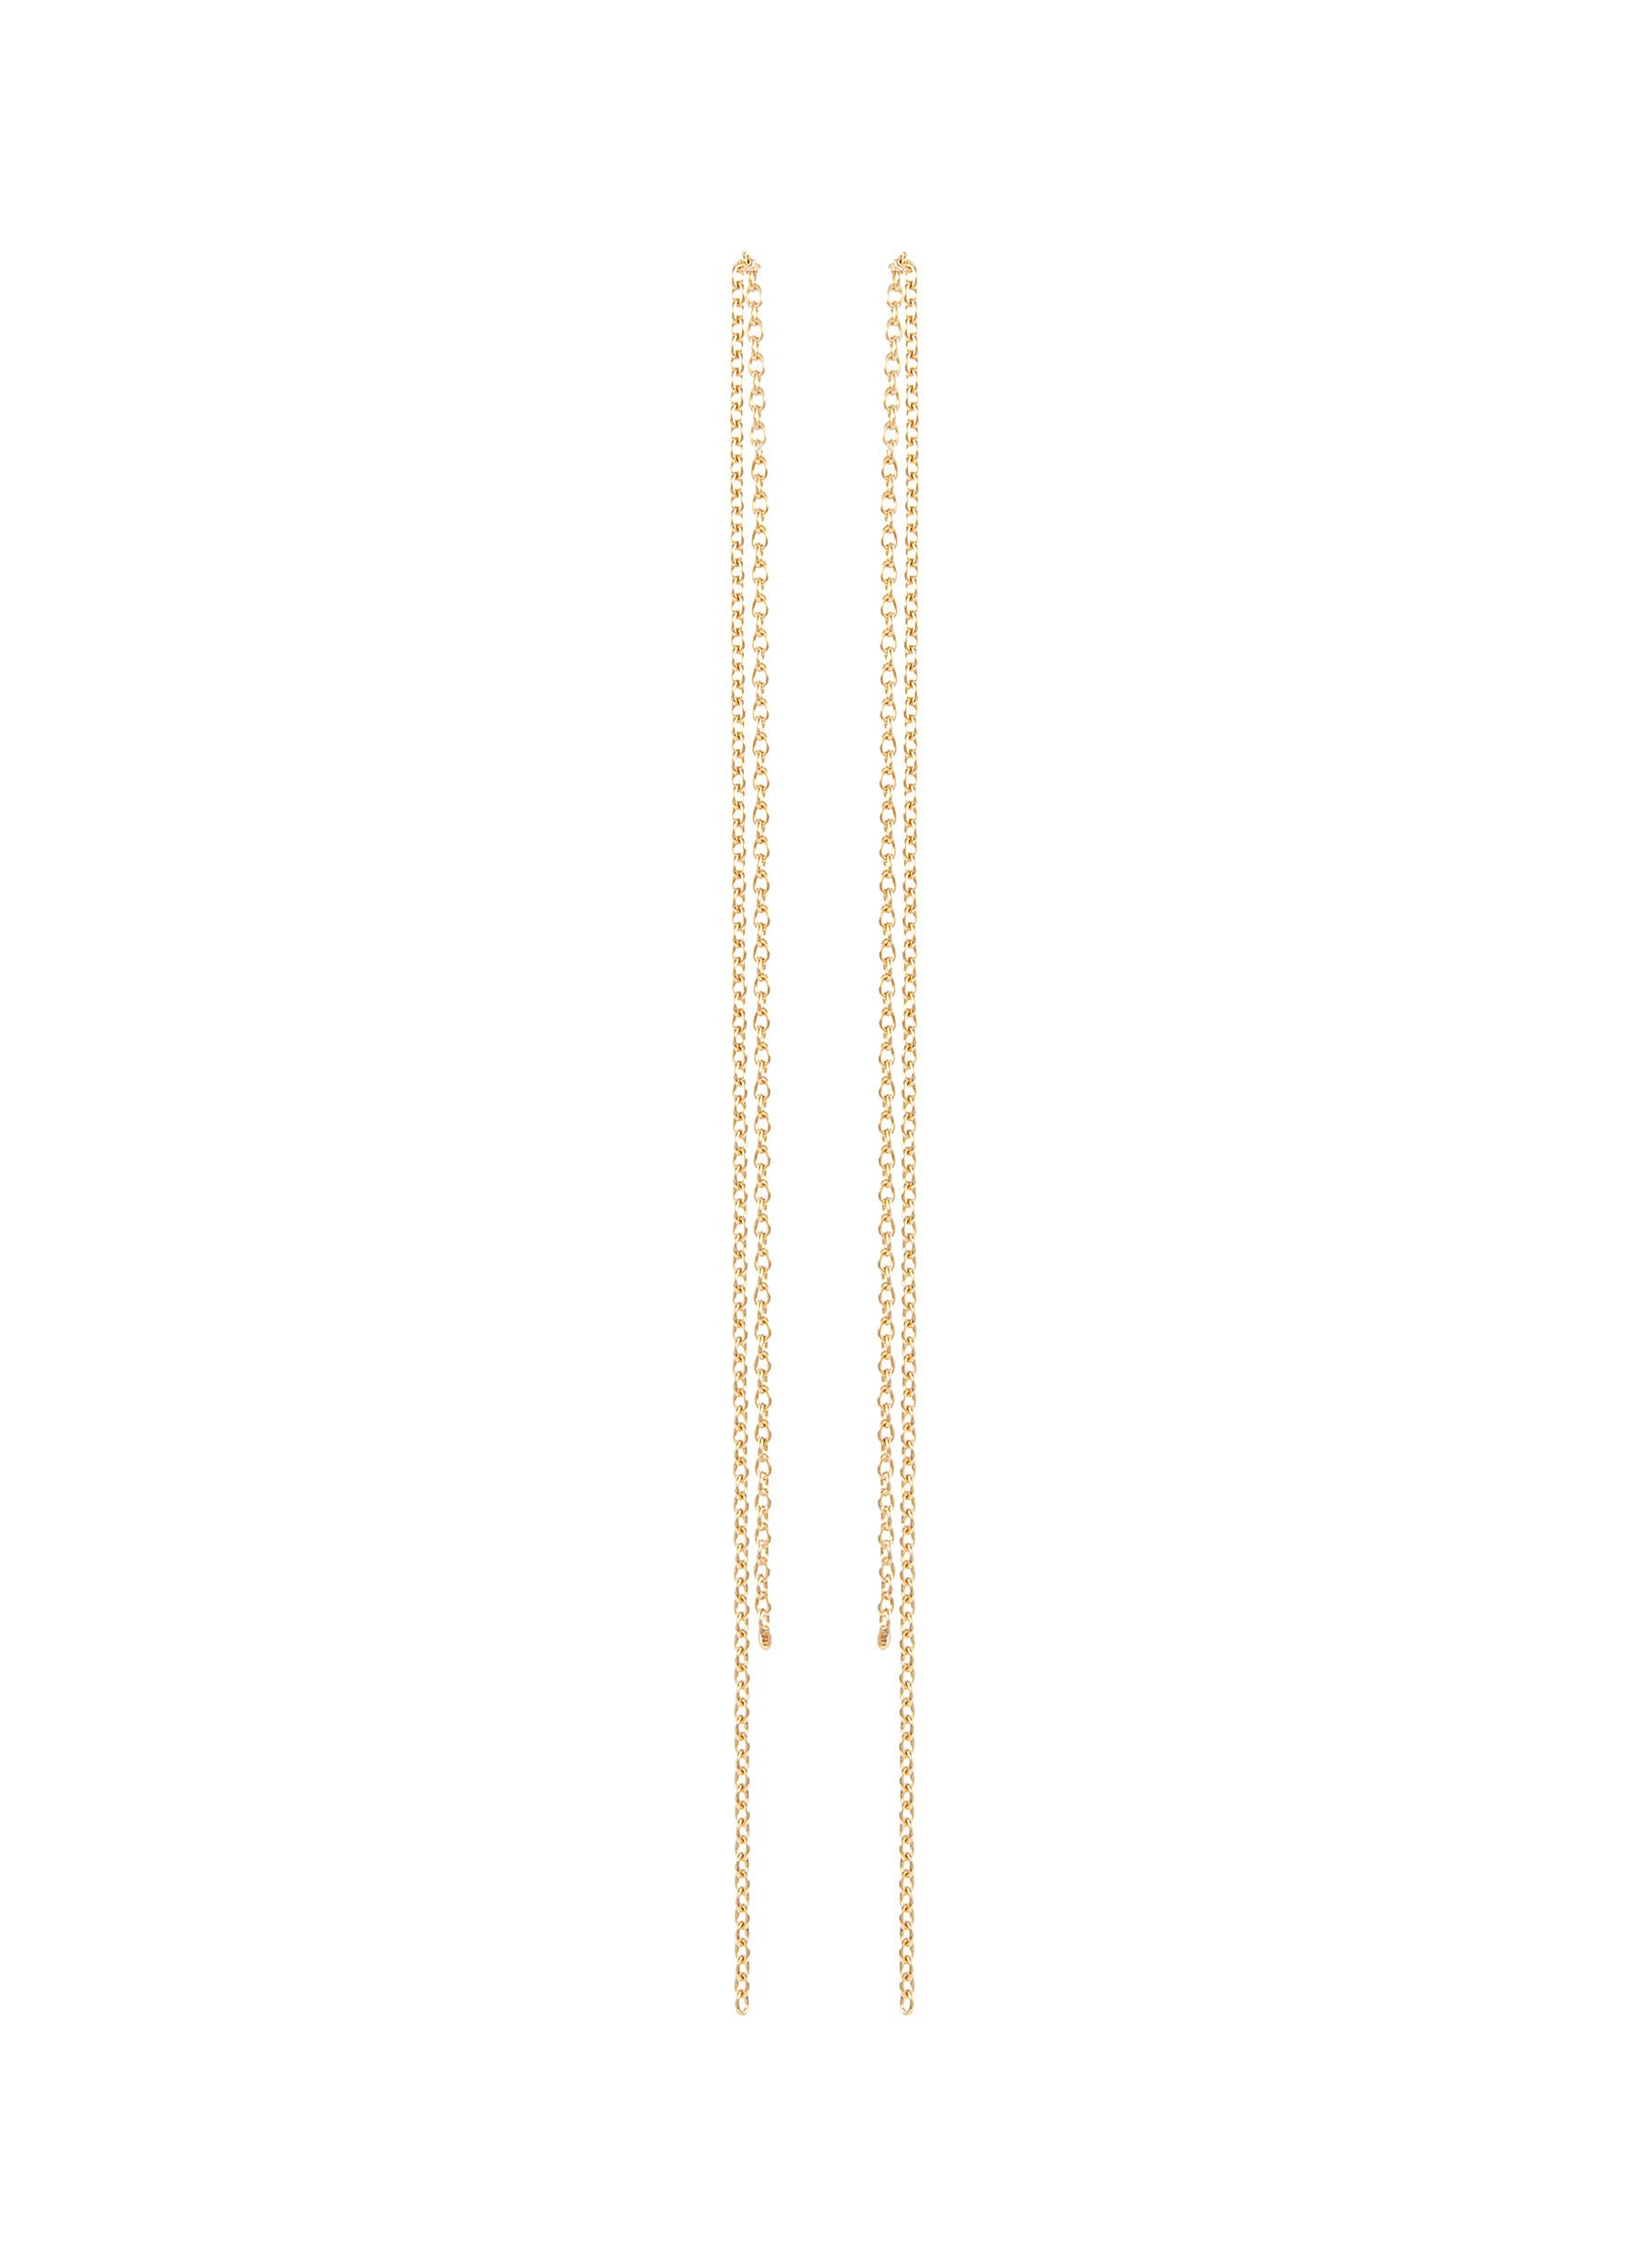 'Chain' 18k yellow gold drop earrings - 200mm